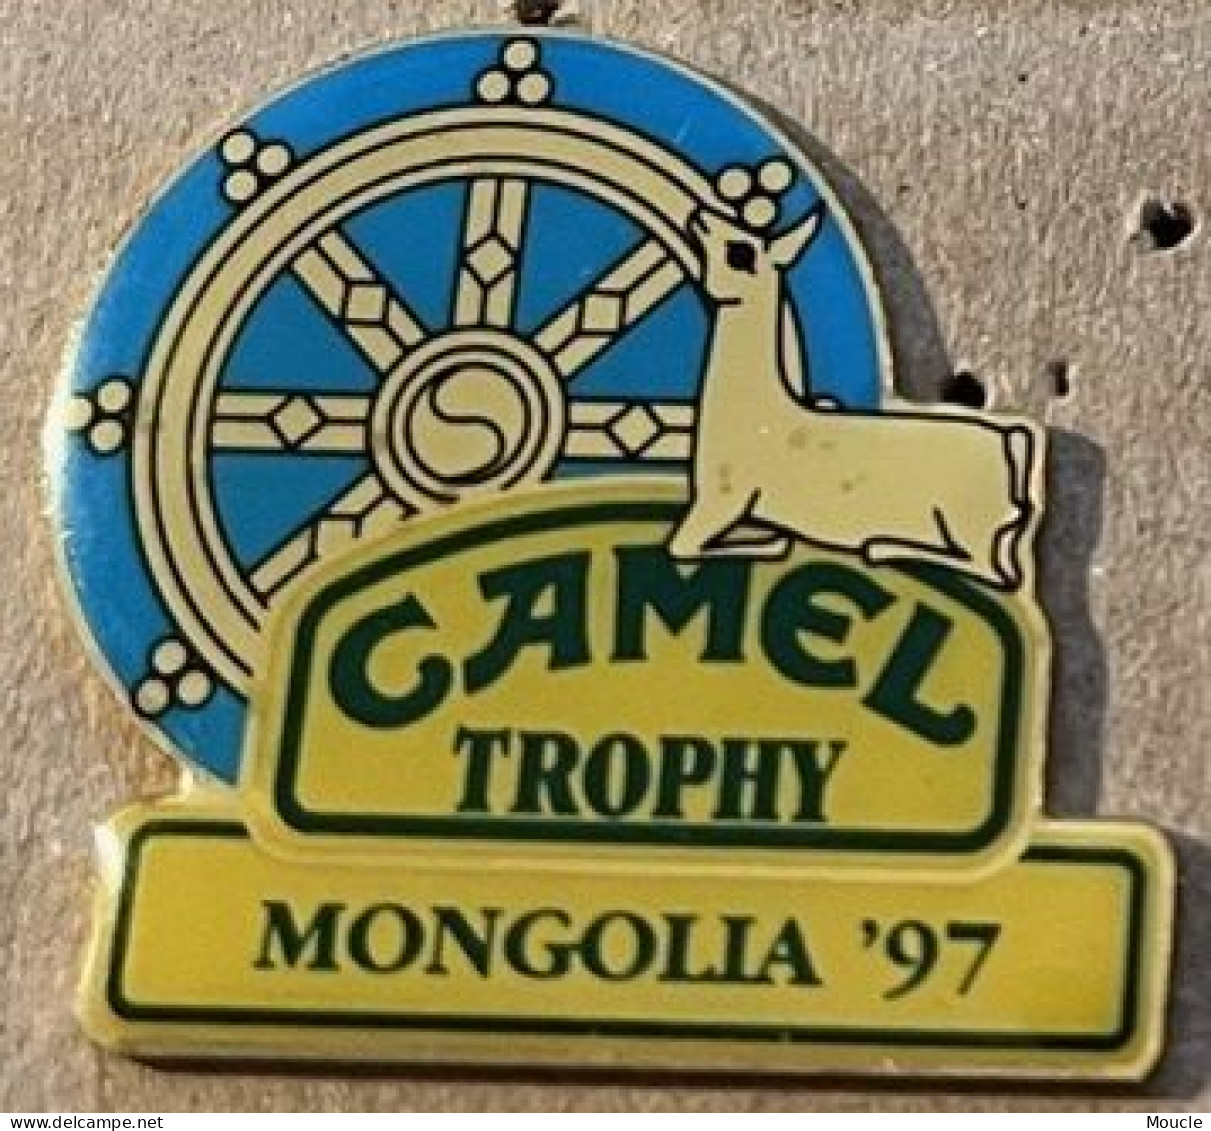 CAMEL TROPHY - MONGOLIA '97 - 1997 - BARRE DE BATEAU - LAMA -                      (31) - Rally